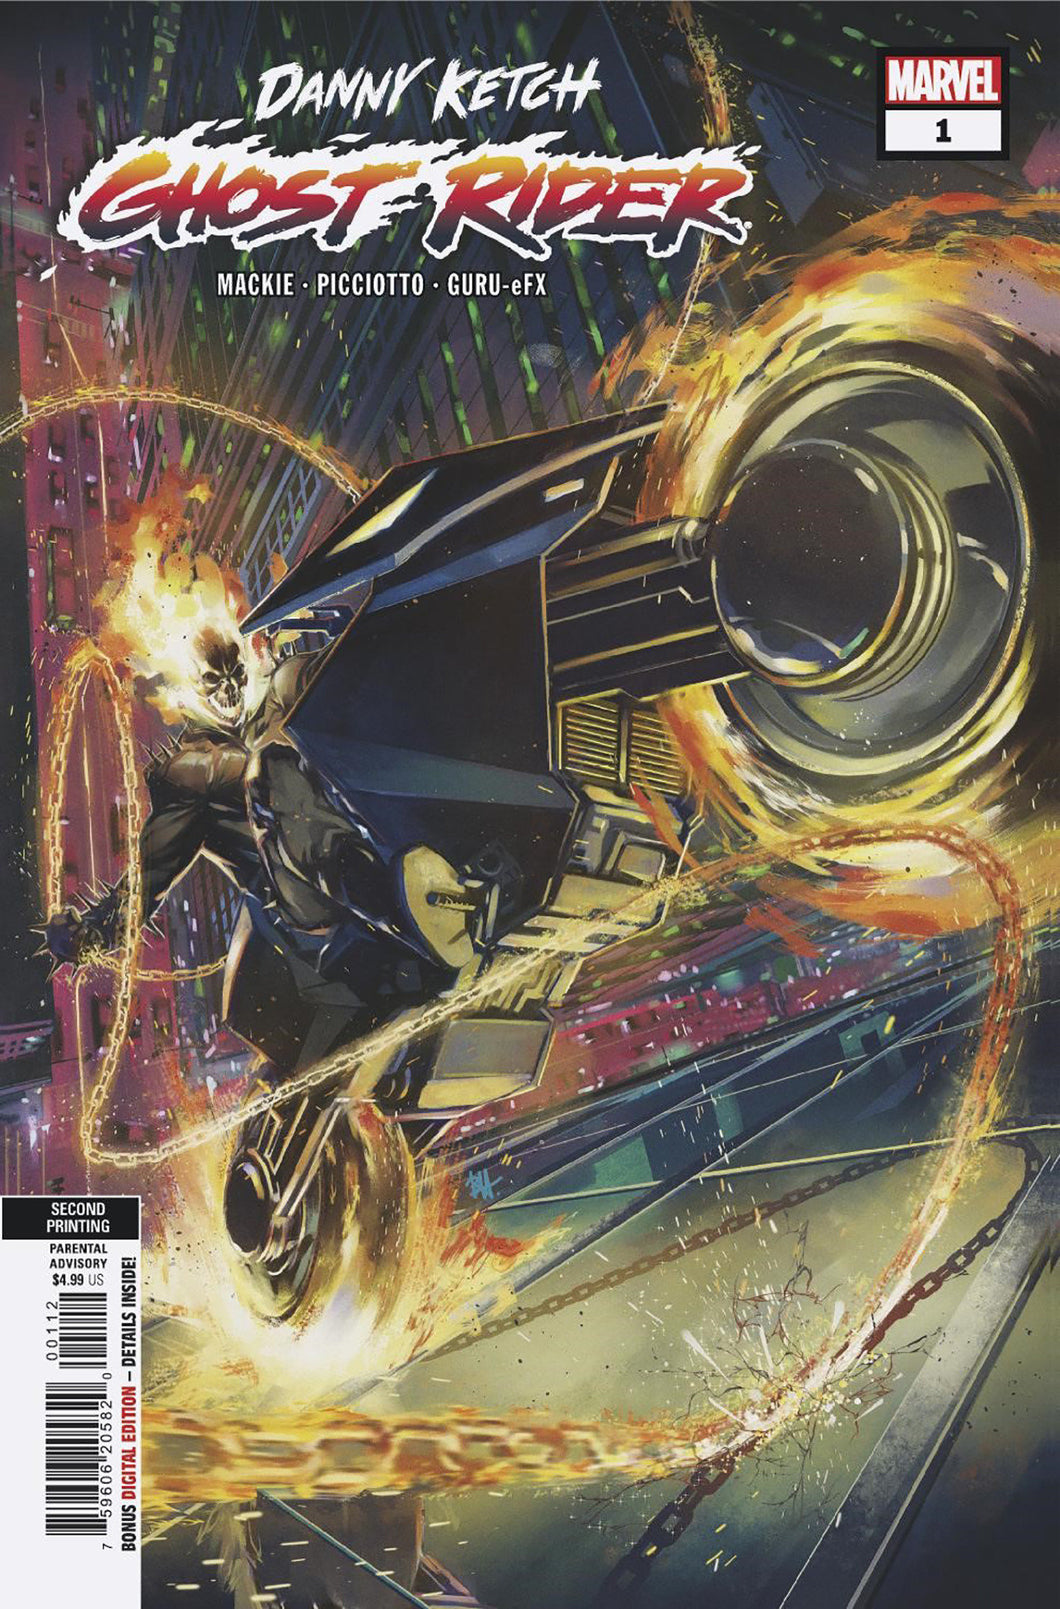 Danny Ketch: Ghost Rider 1 Ben Harvey 2nd Print Variant